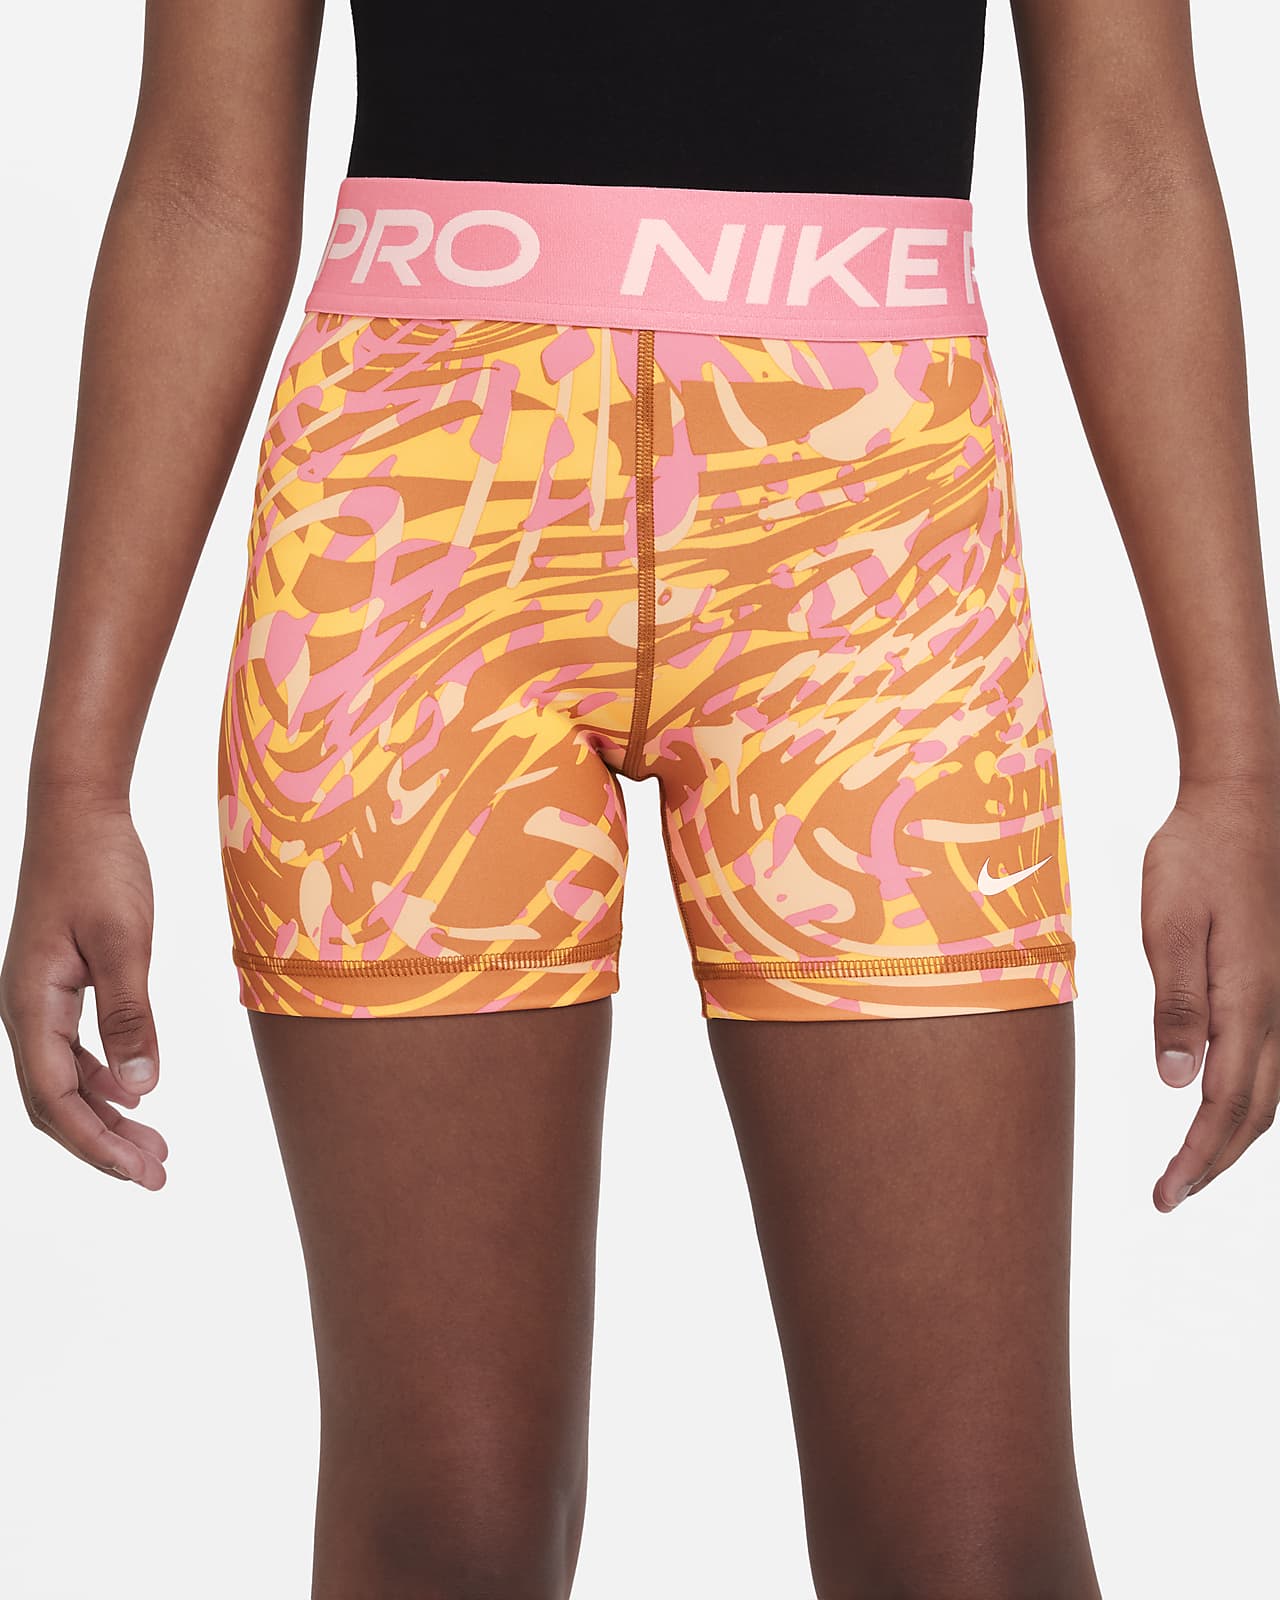 nike pro 3 inch shorts canada